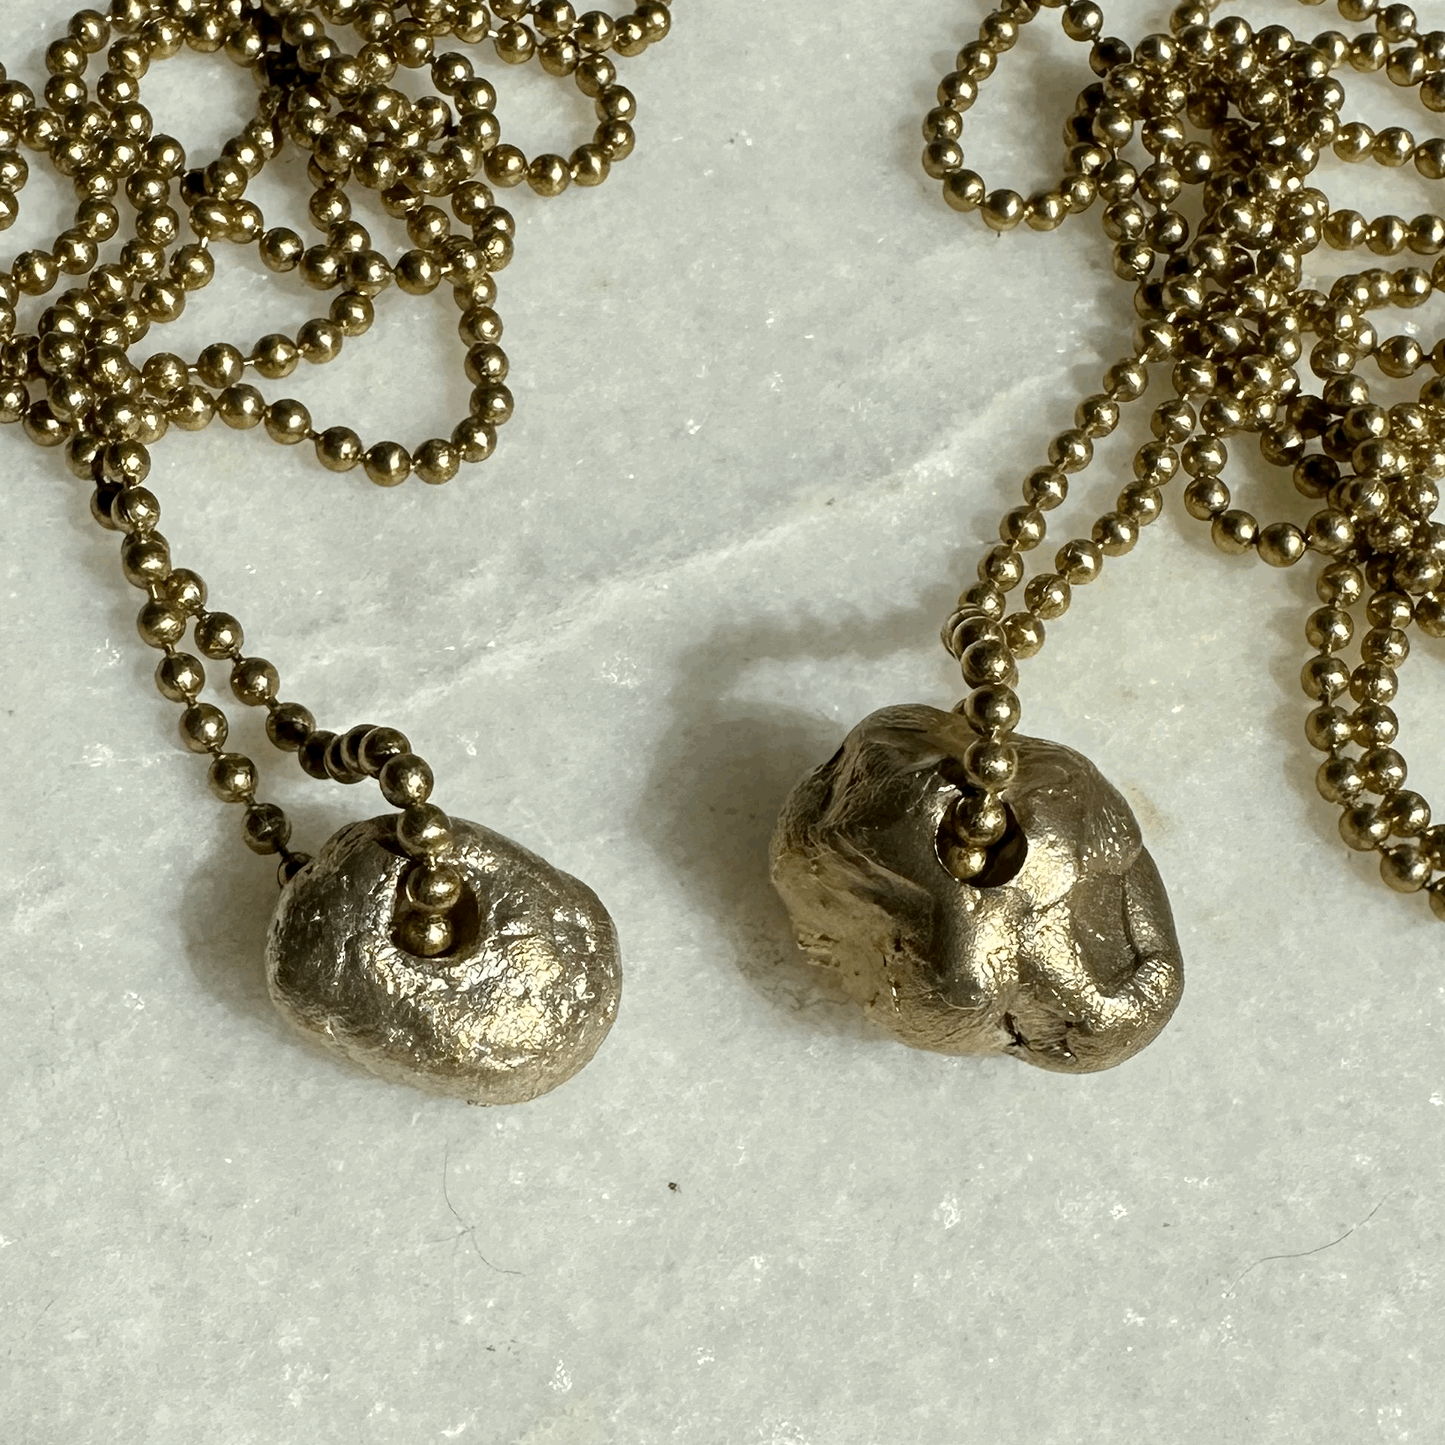 Brass Hag Stone Pendants in two sizes.